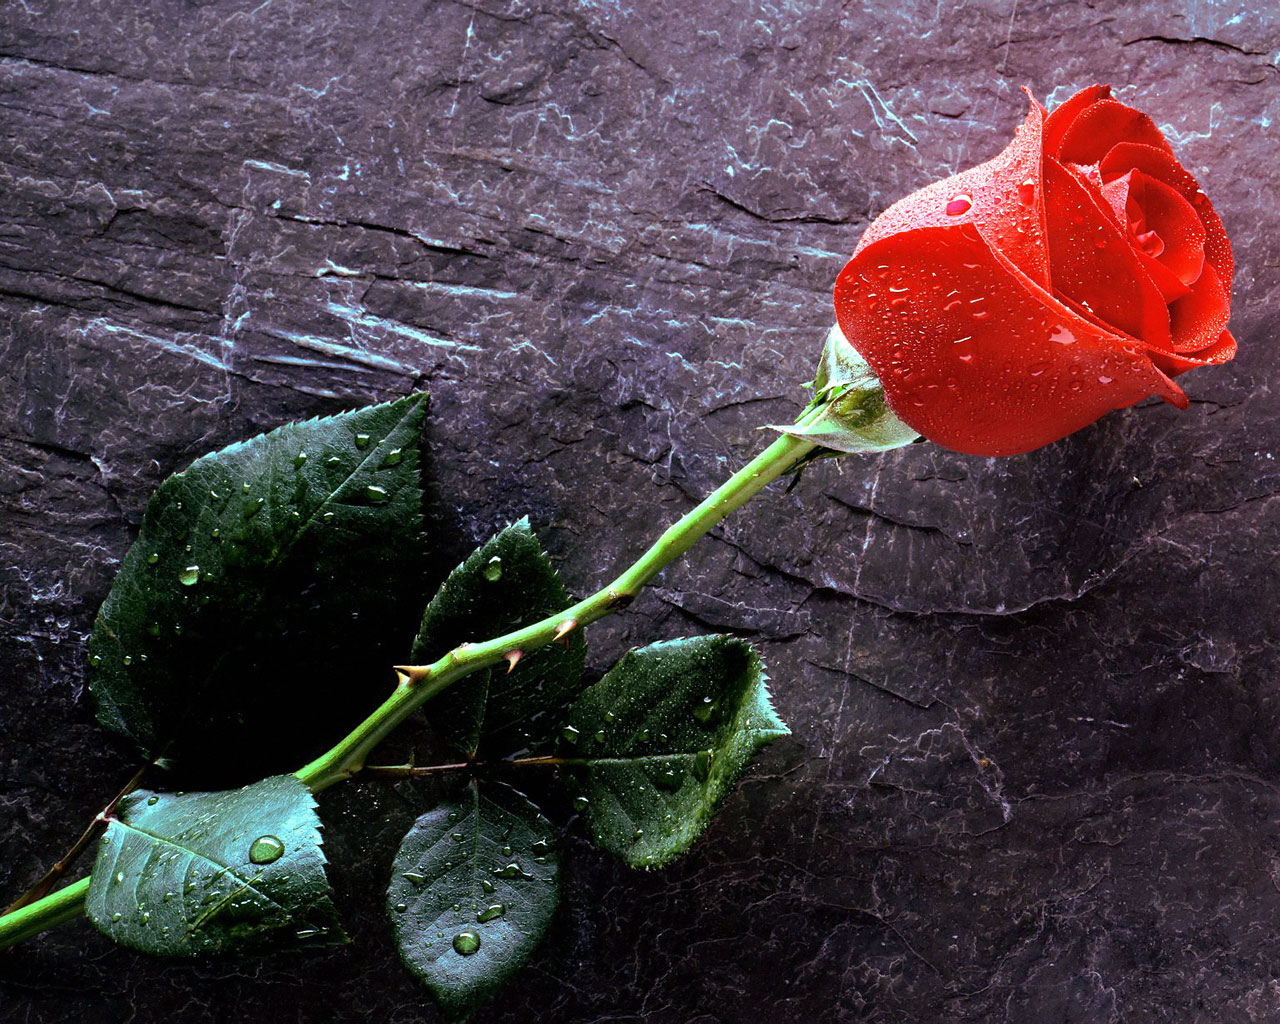 http://2.bp.blogspot.com/-WjwvVtpY4xk/TyGBSV85sSI/AAAAAAAABfM/CI0LCy81MqI/s1600/True-Love-Forever-Red-Rose-Wallpaper.jpg